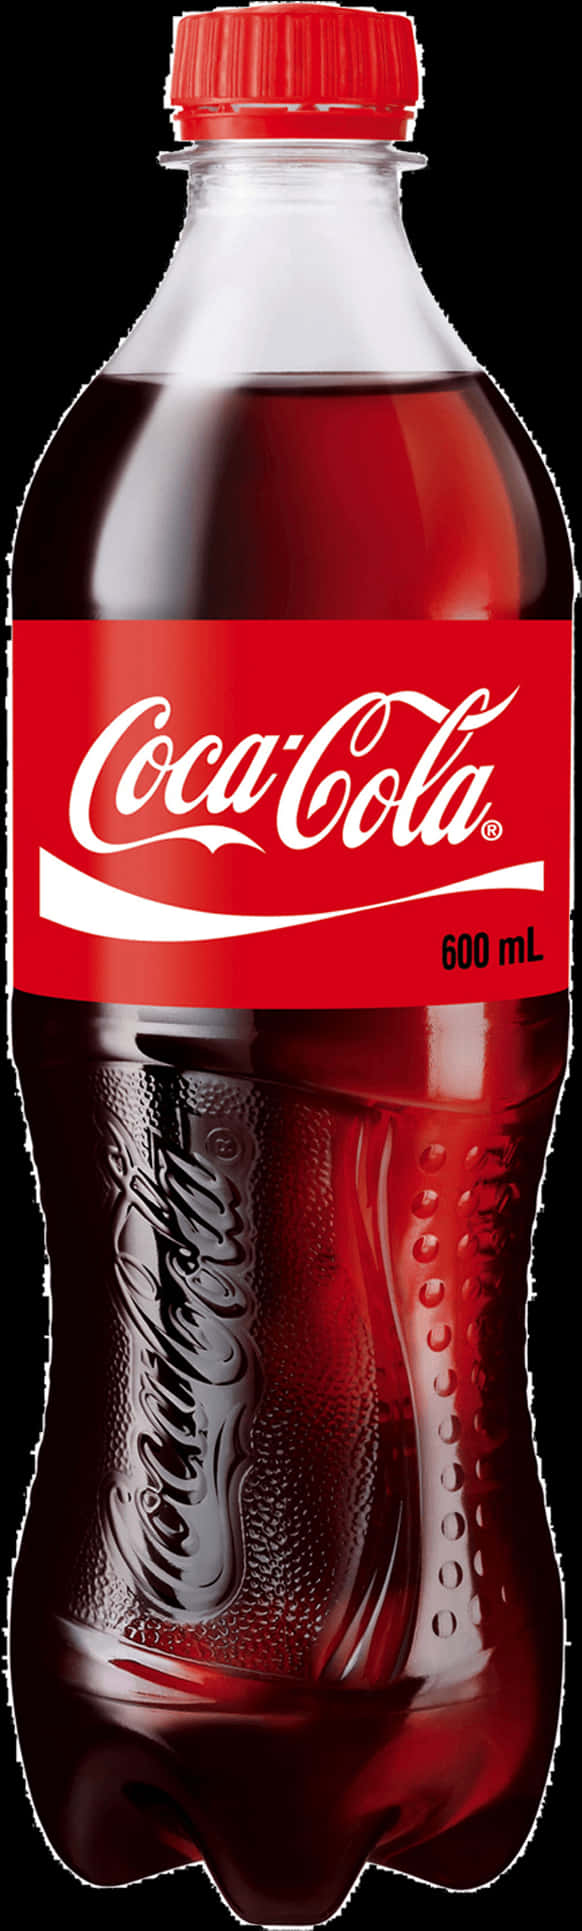 Coca Cola600ml Bottle